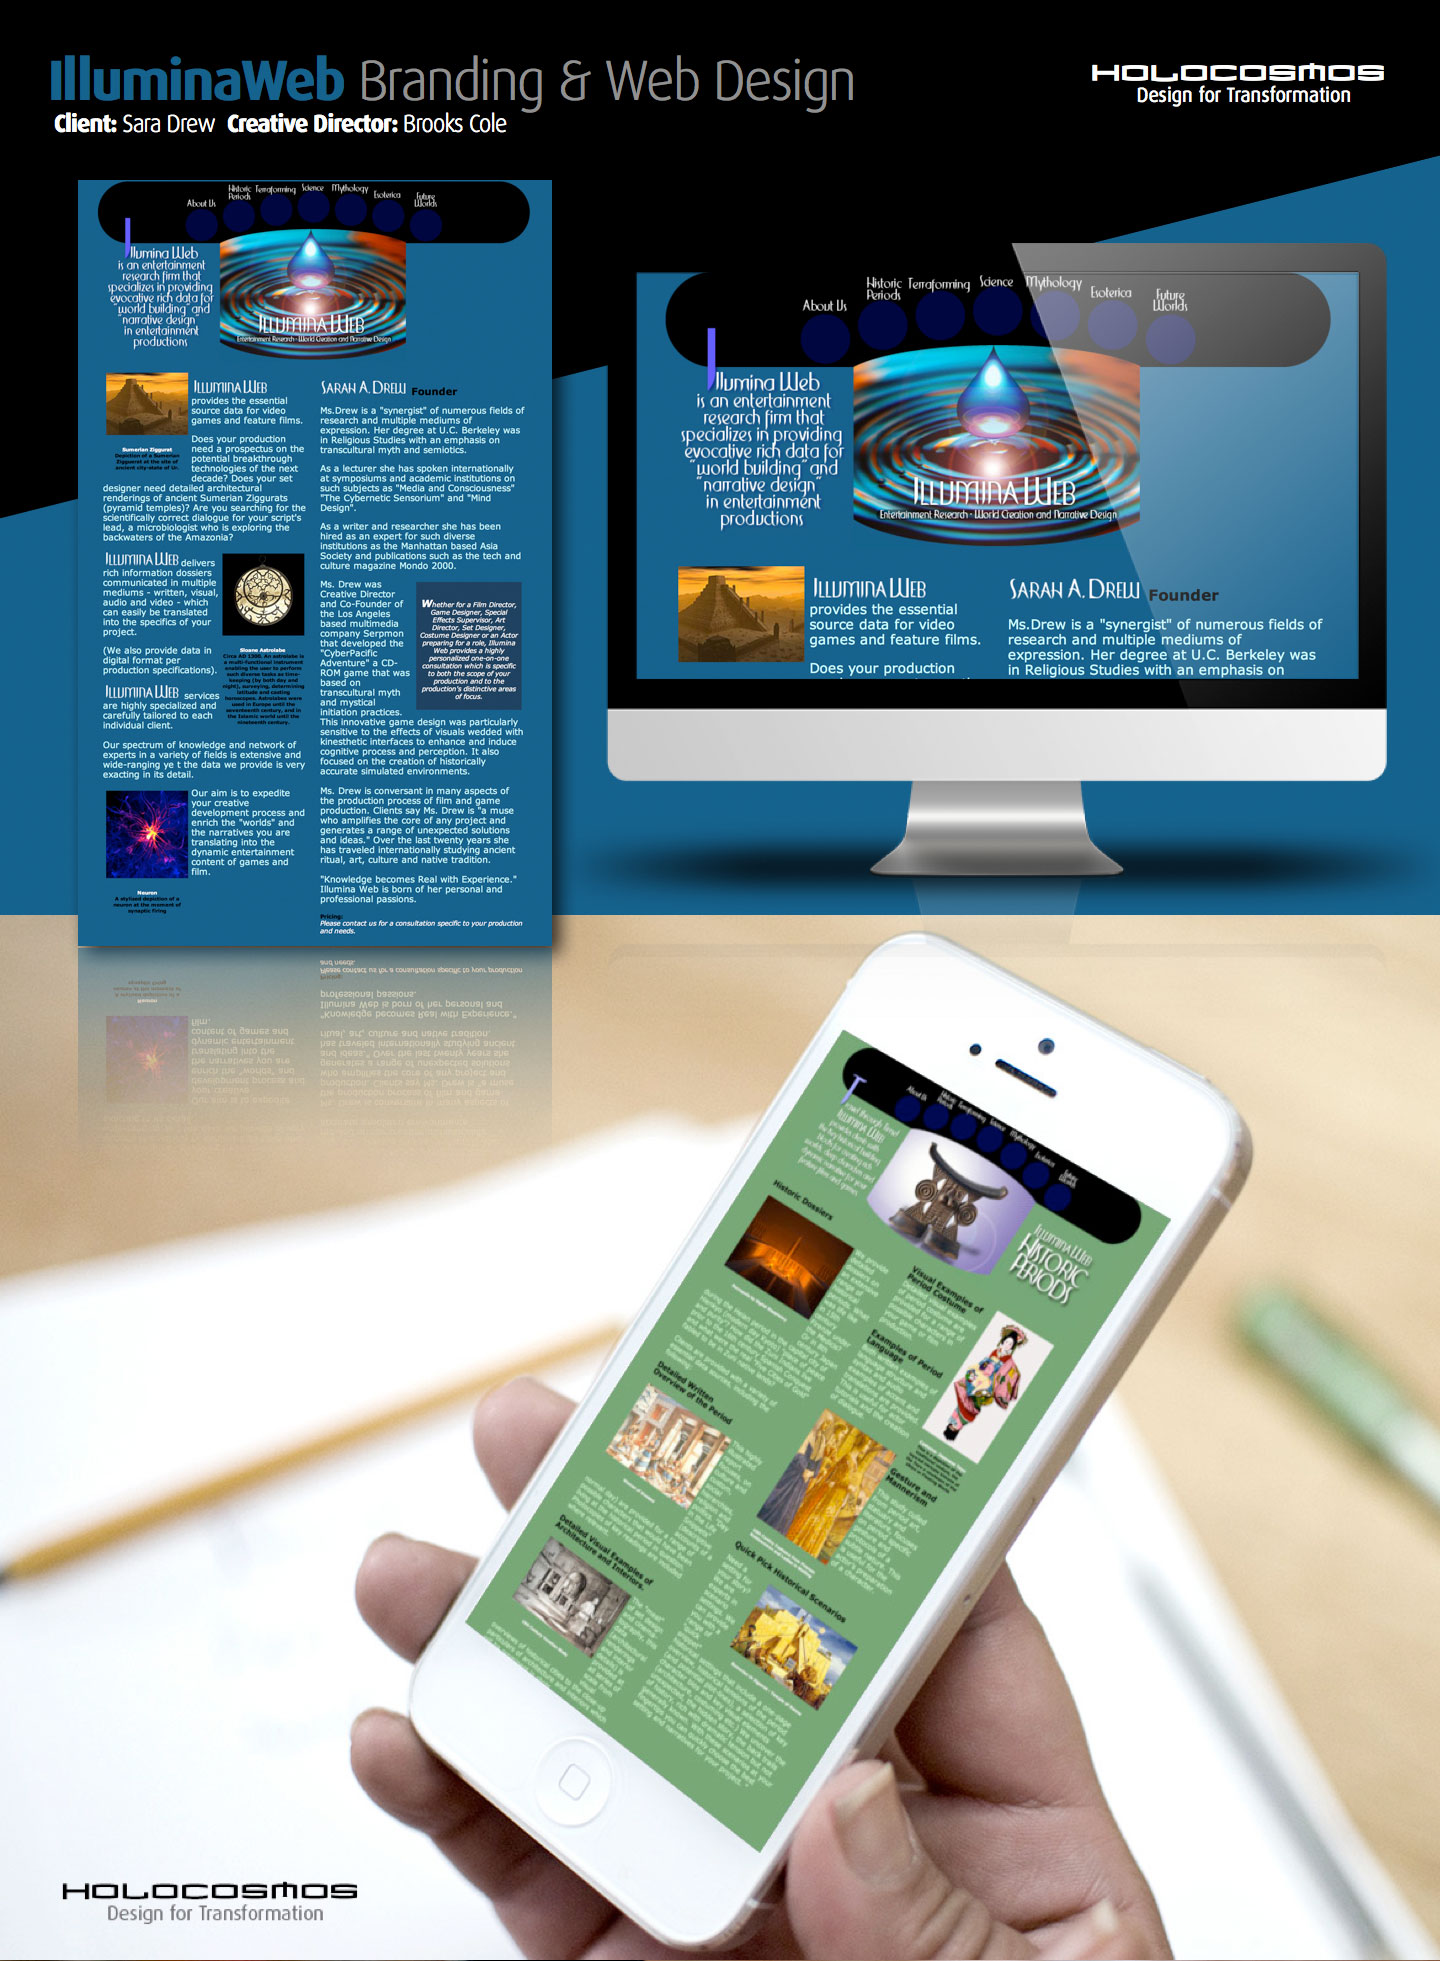 IlluminaWeb-Historic-Placeit-iPadMini-design-by-HoloCosmos